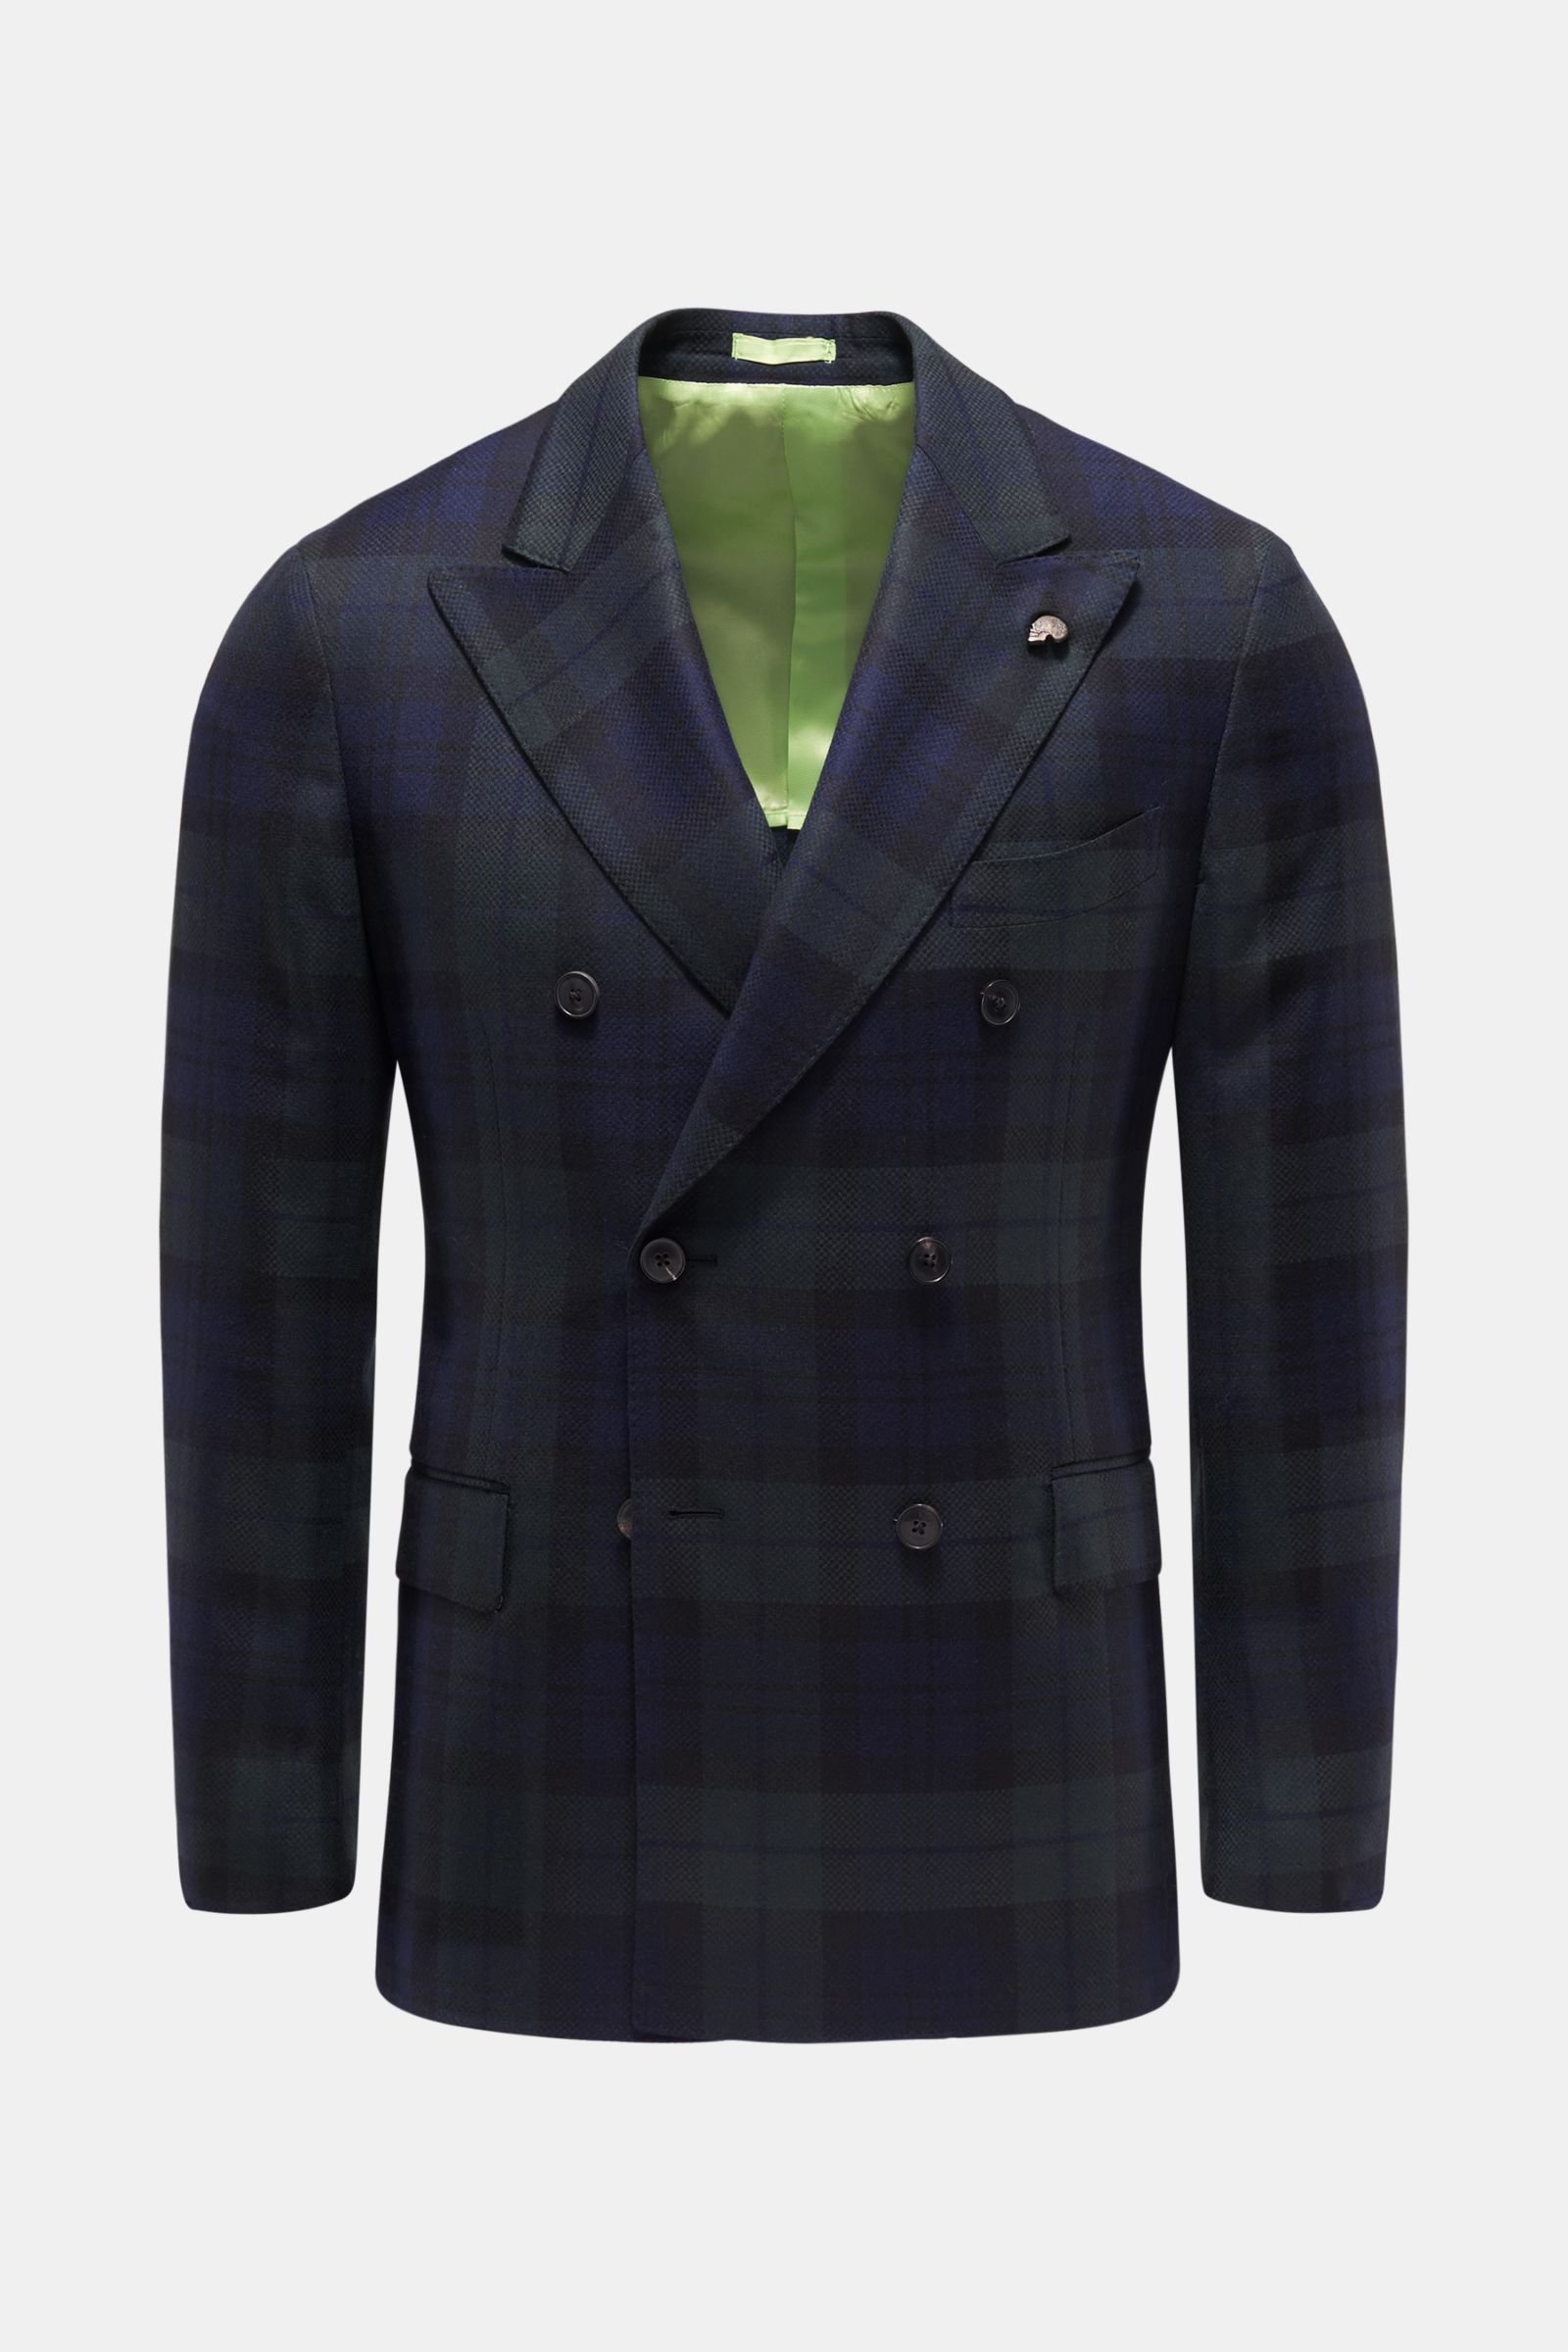 Smart-casual jacket navy/dark green checked